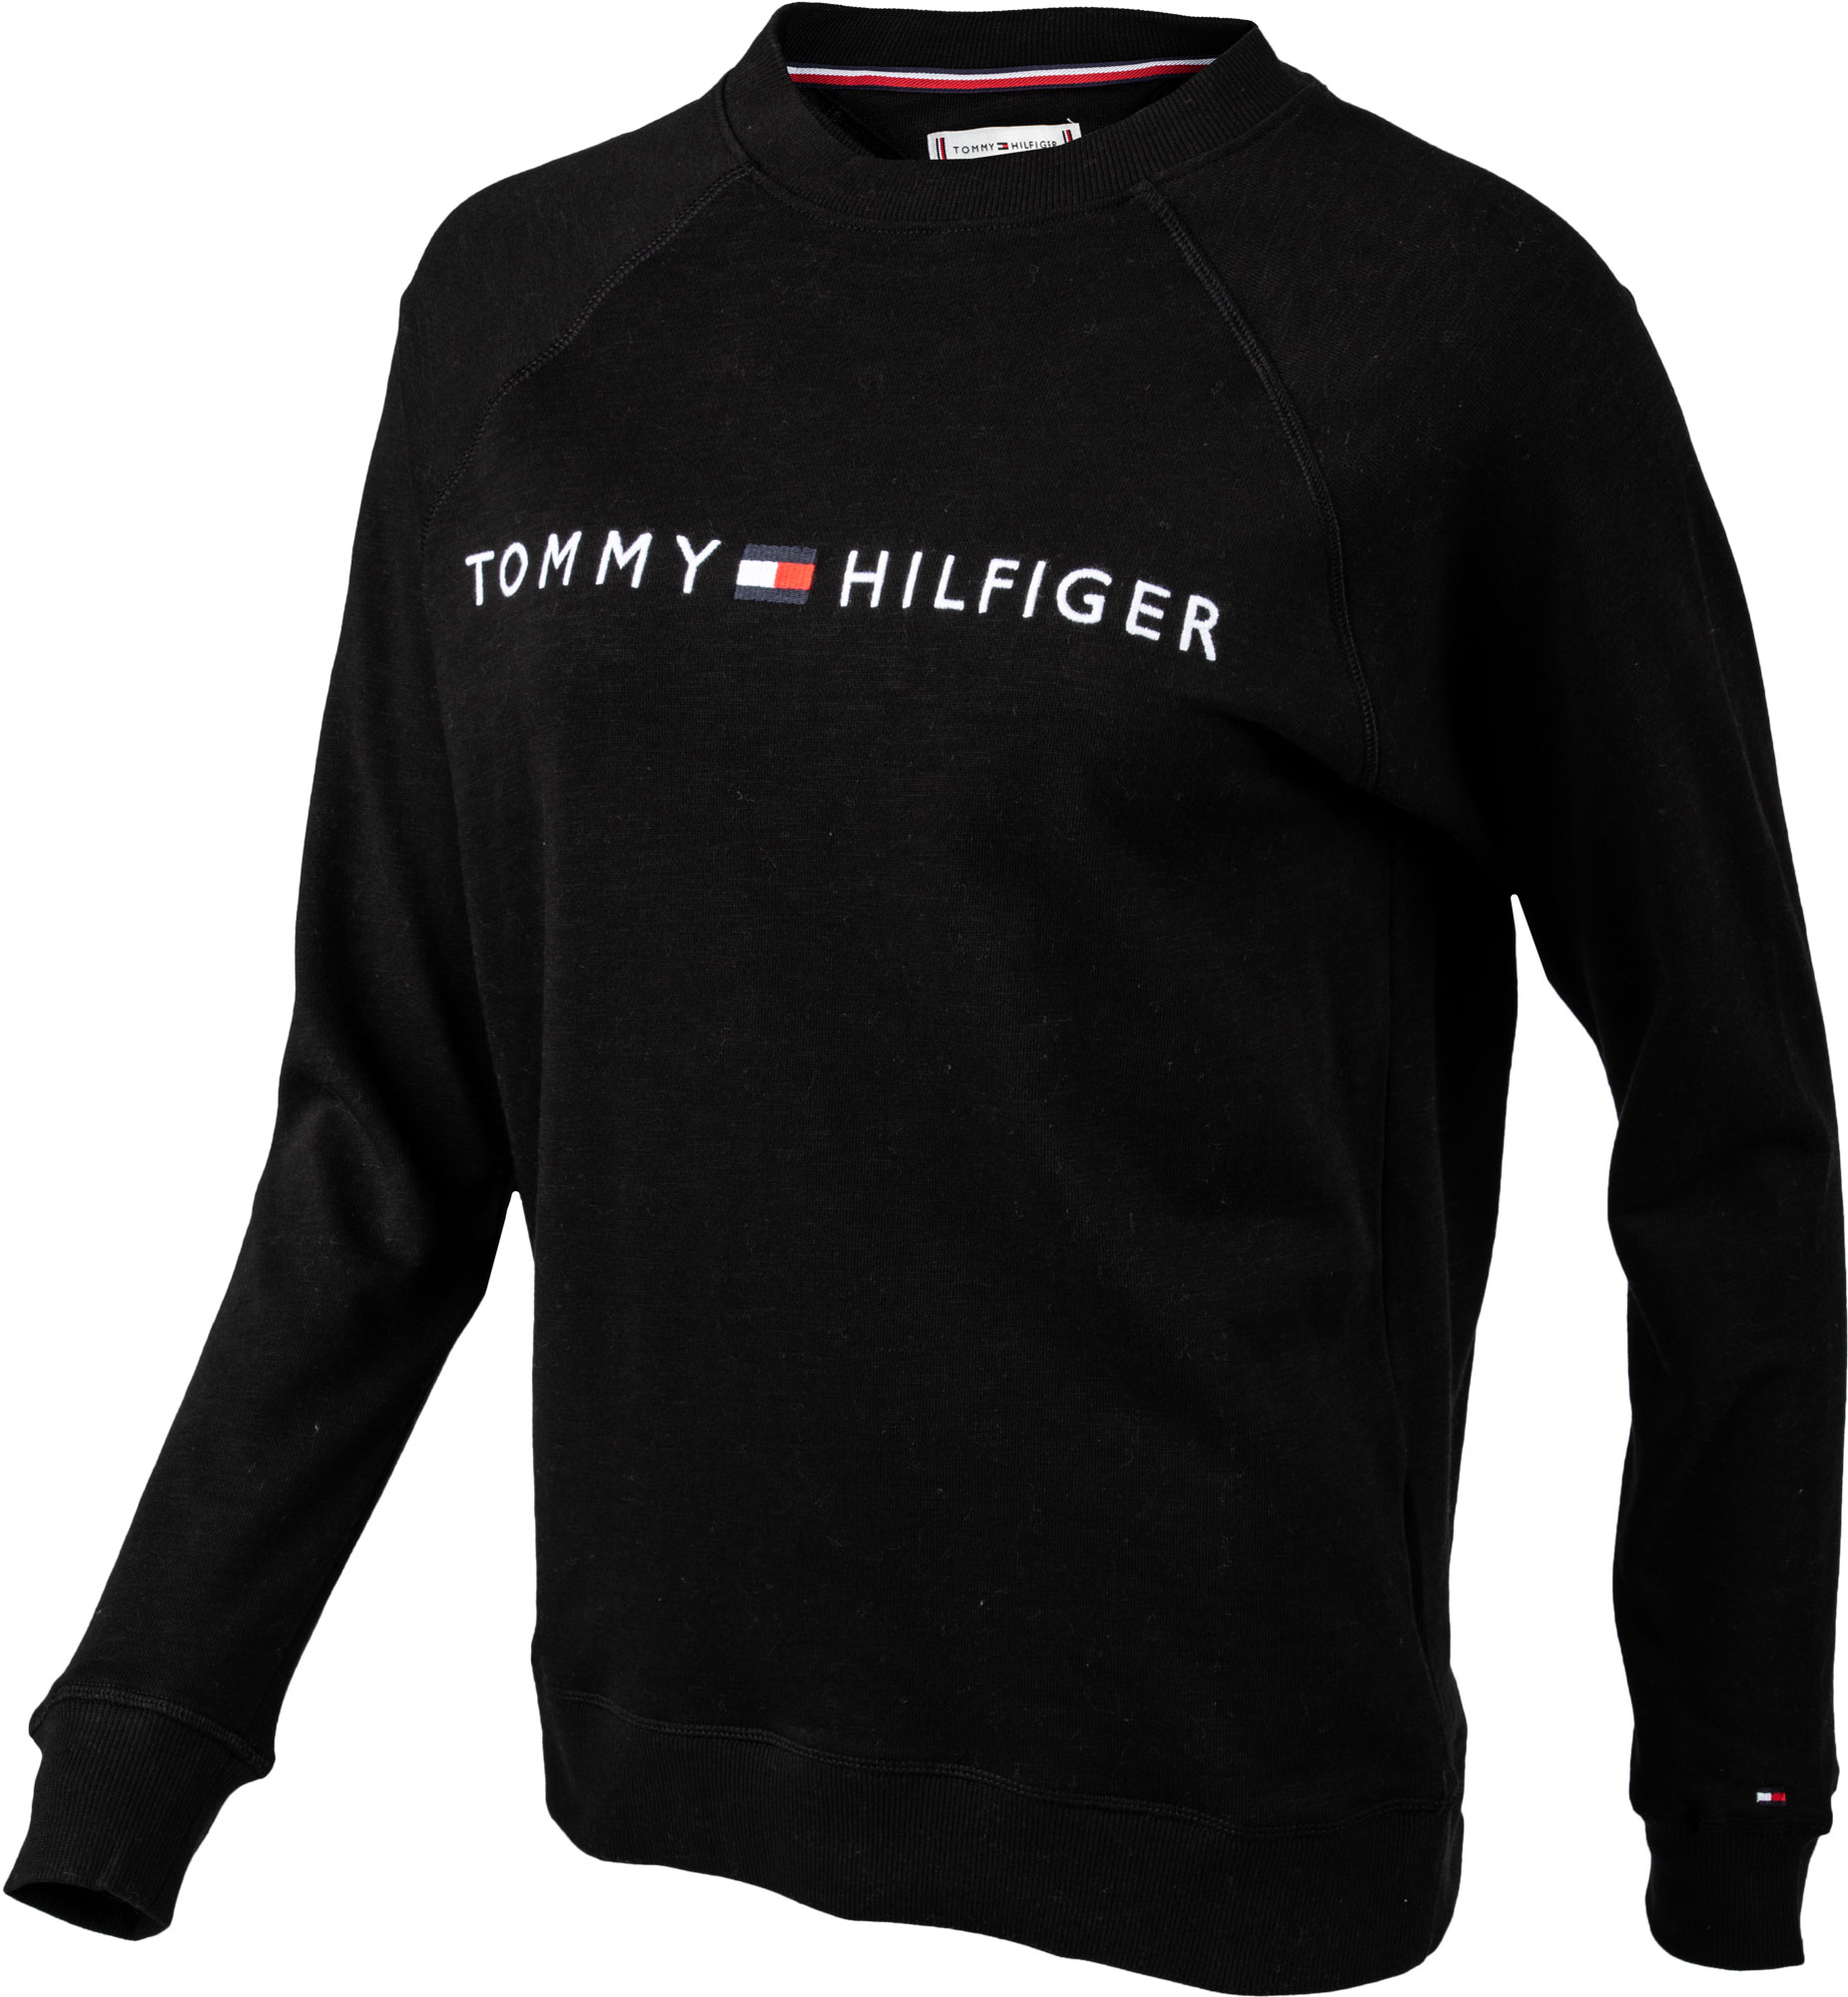 Tommy Hilfiger CN TRACK TOP LS | sportisimo.com